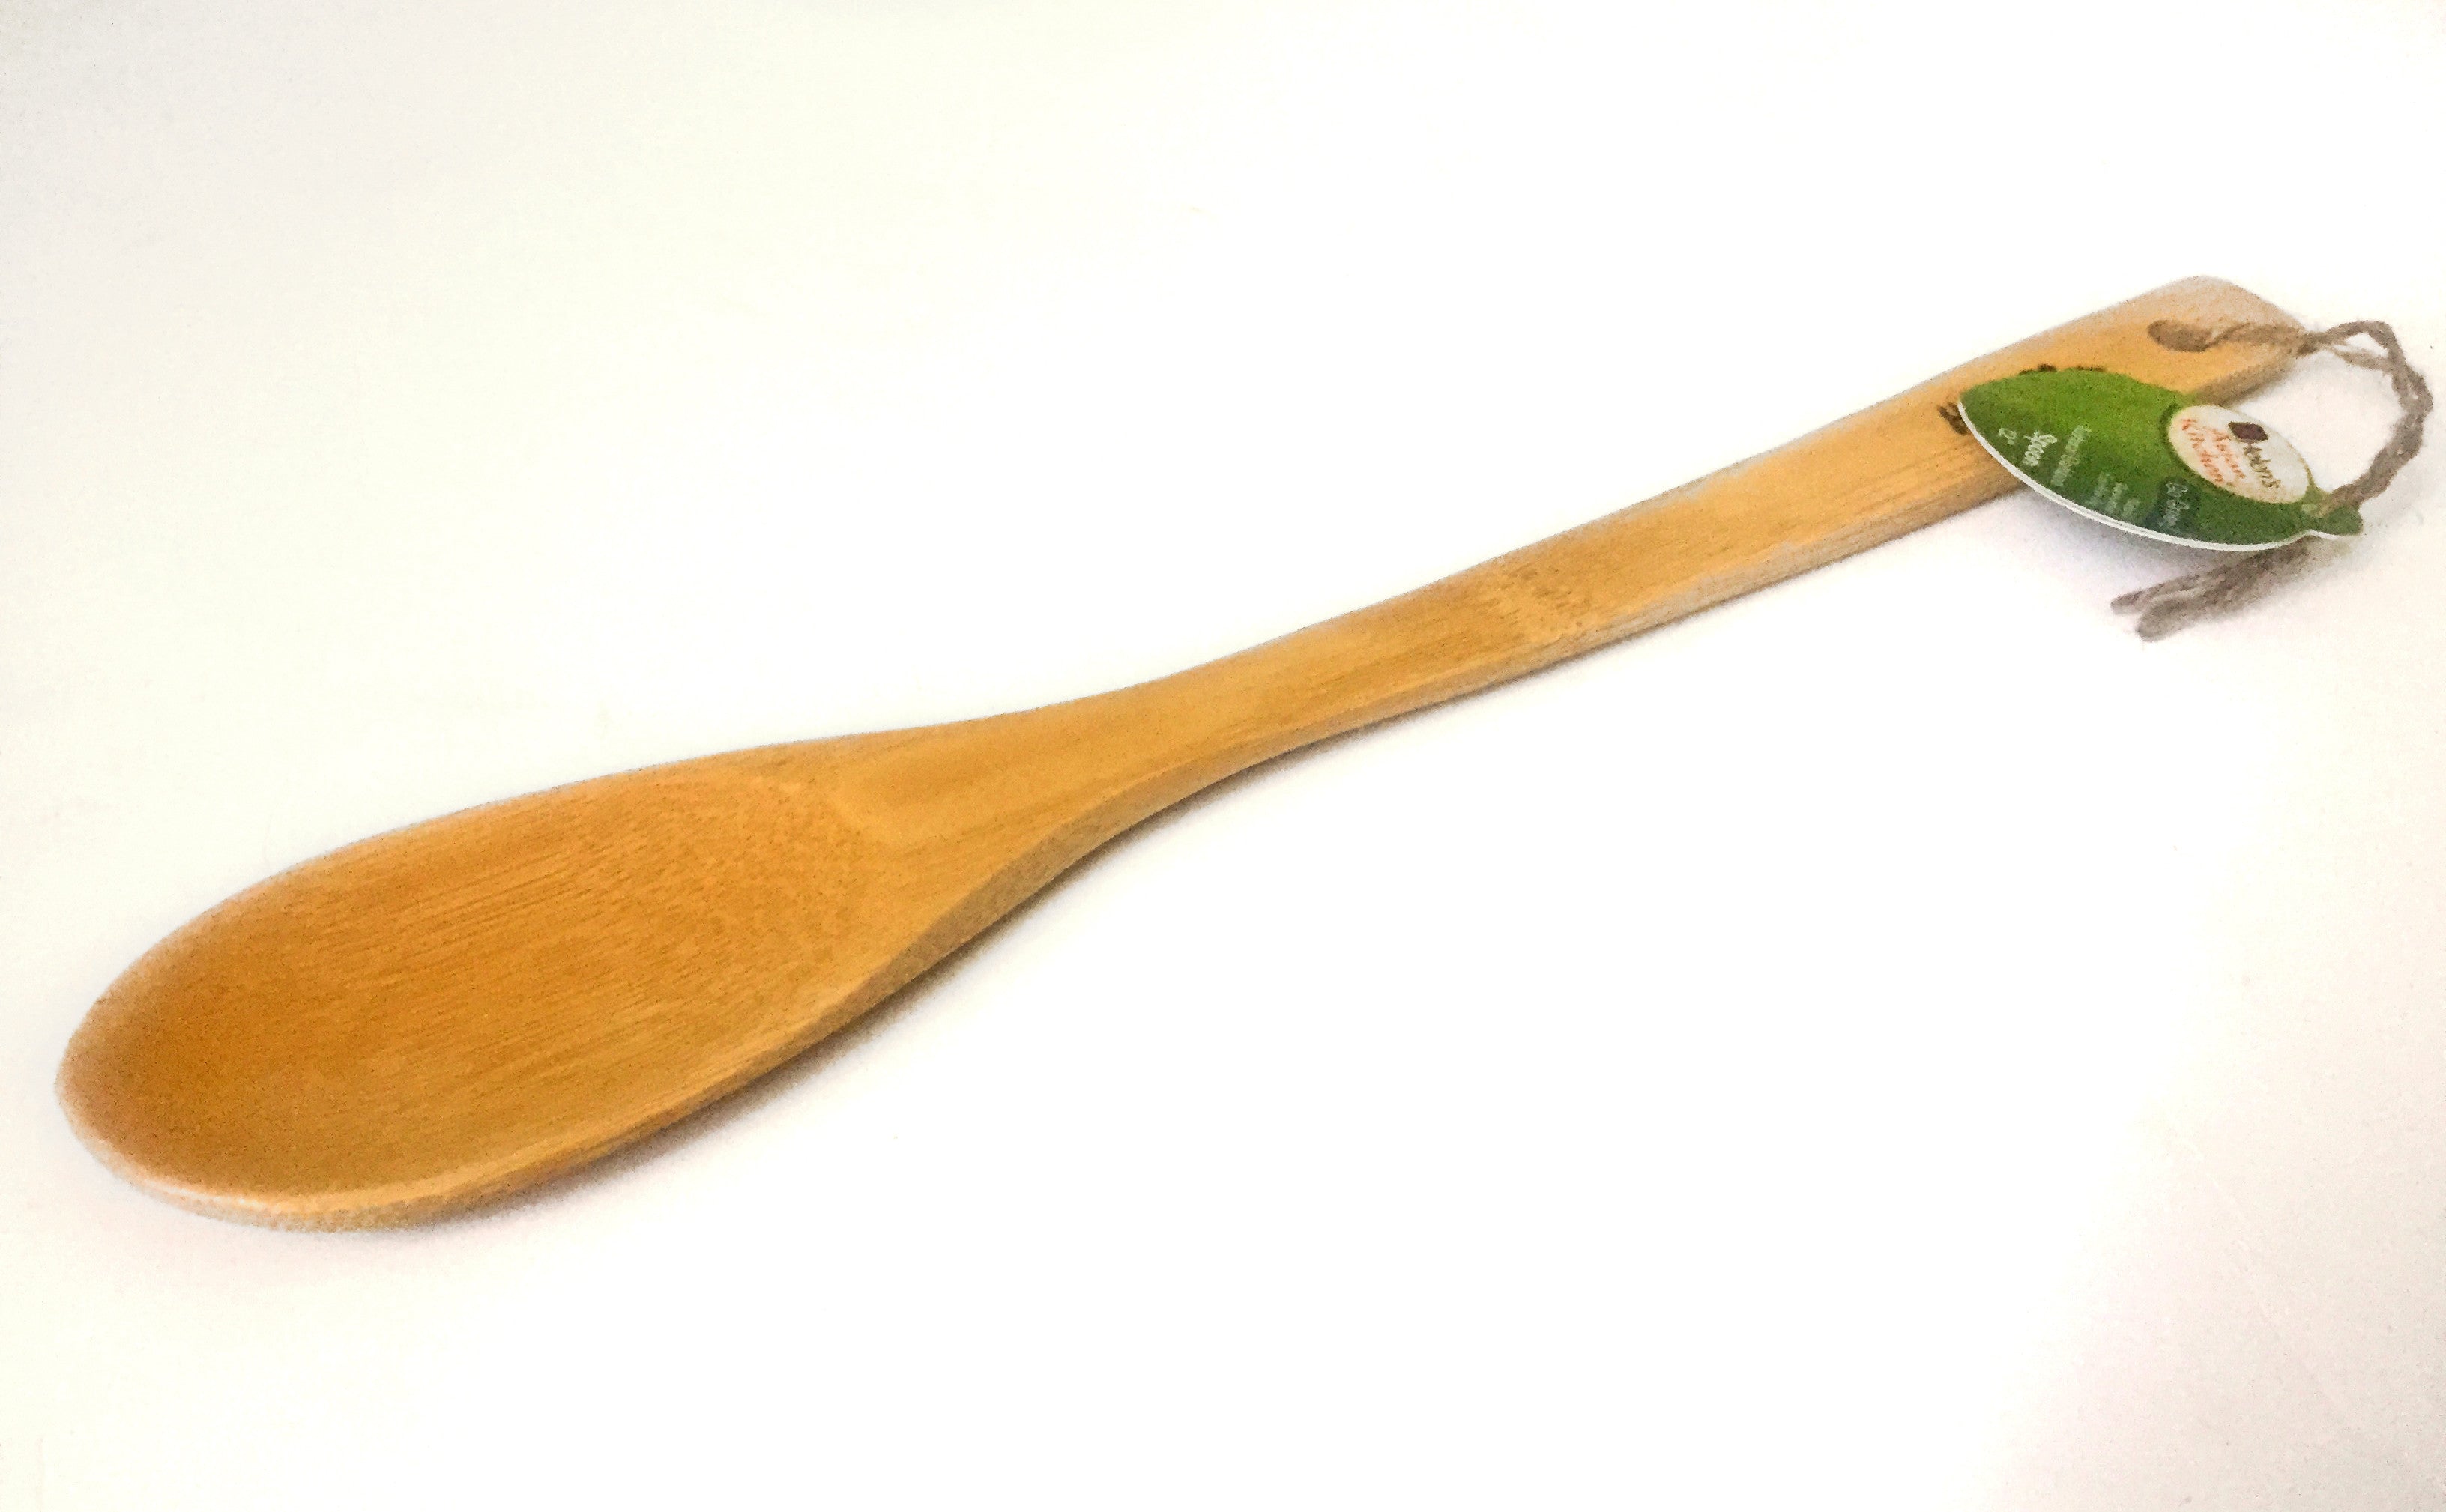 Natural Bamboo Spoon - Yemoos Nourishing Cultures